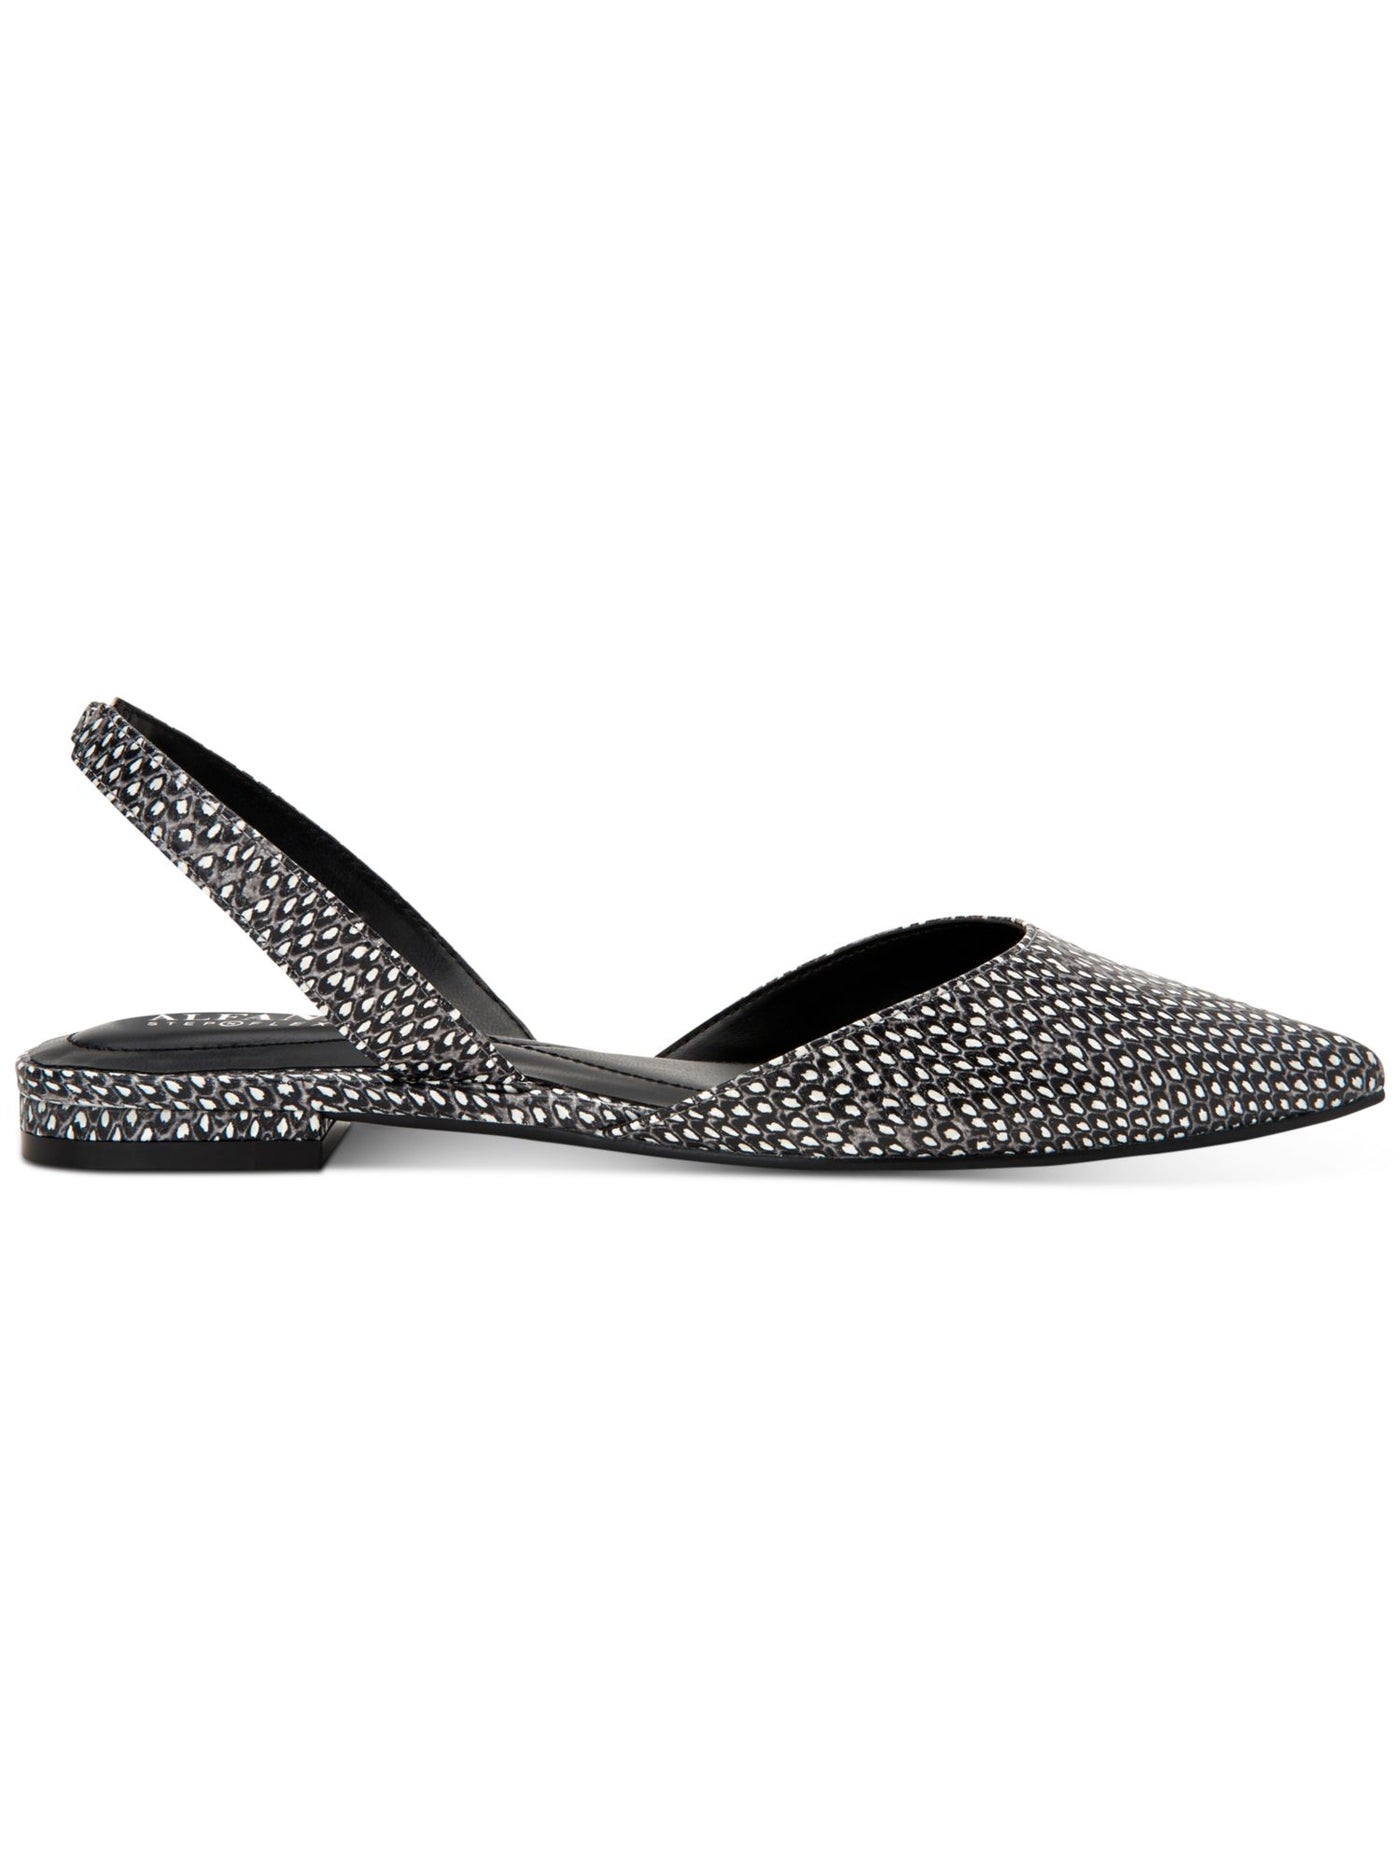 ALFANI Womens Black Snakeskin Cushioned Comfort Ryann Pointed Toe Block Heel Slip On Flats Shoes 5.5 M